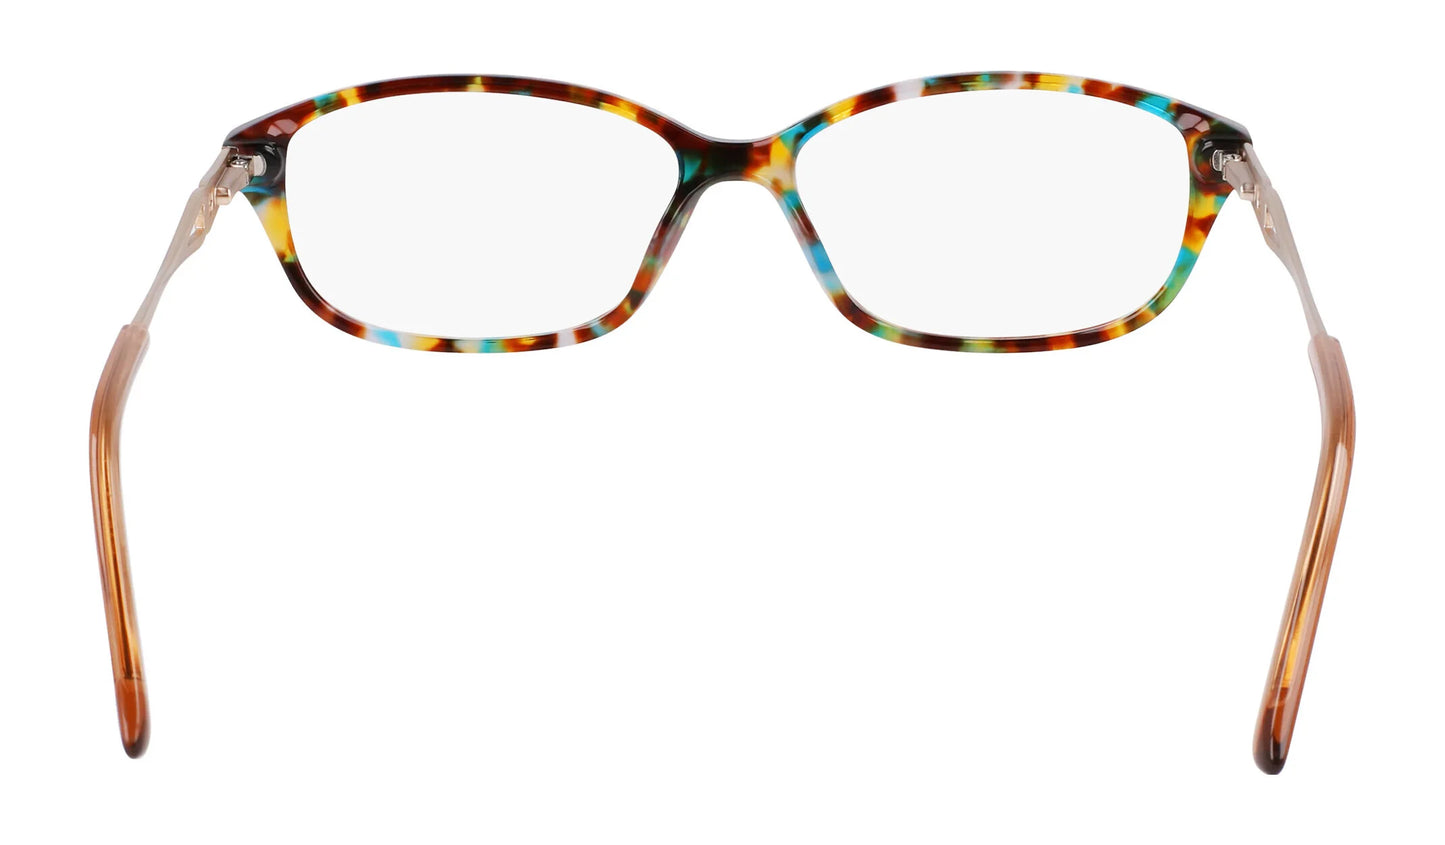 Marchon NYC 5027 Eyeglasses